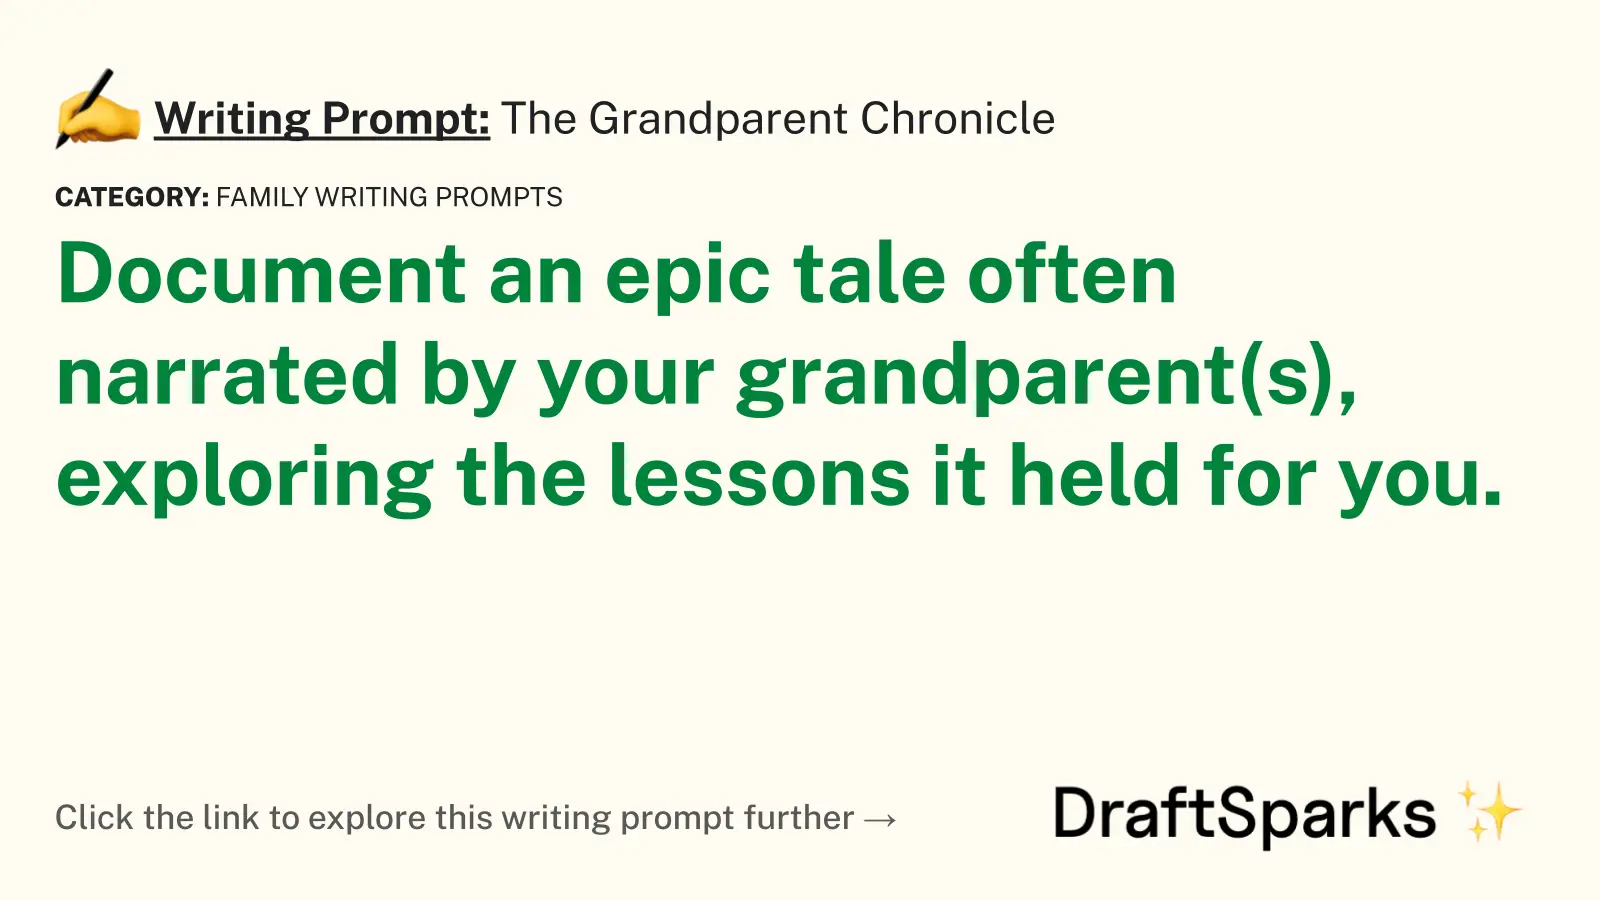 The Grandparent Chronicle